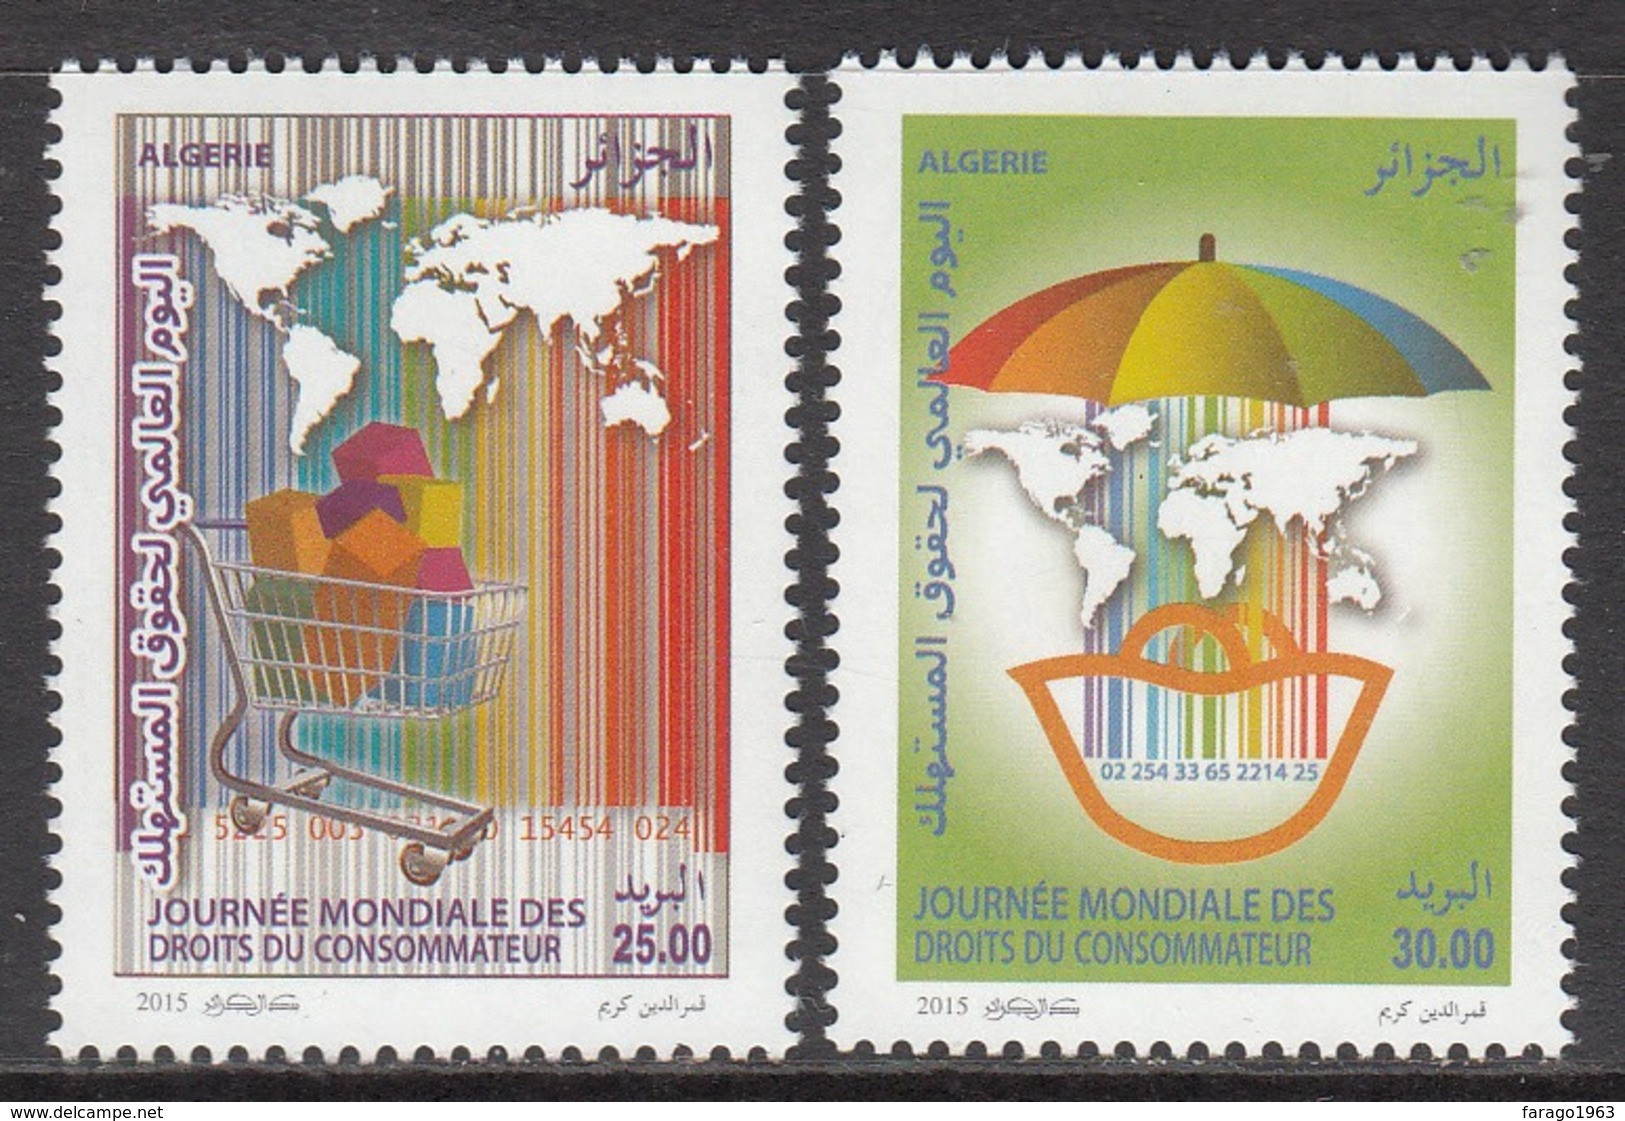 2015 Algeria Algerie Consumer Rights Complete Set Of 2 MNH - Algeria (1962-...)